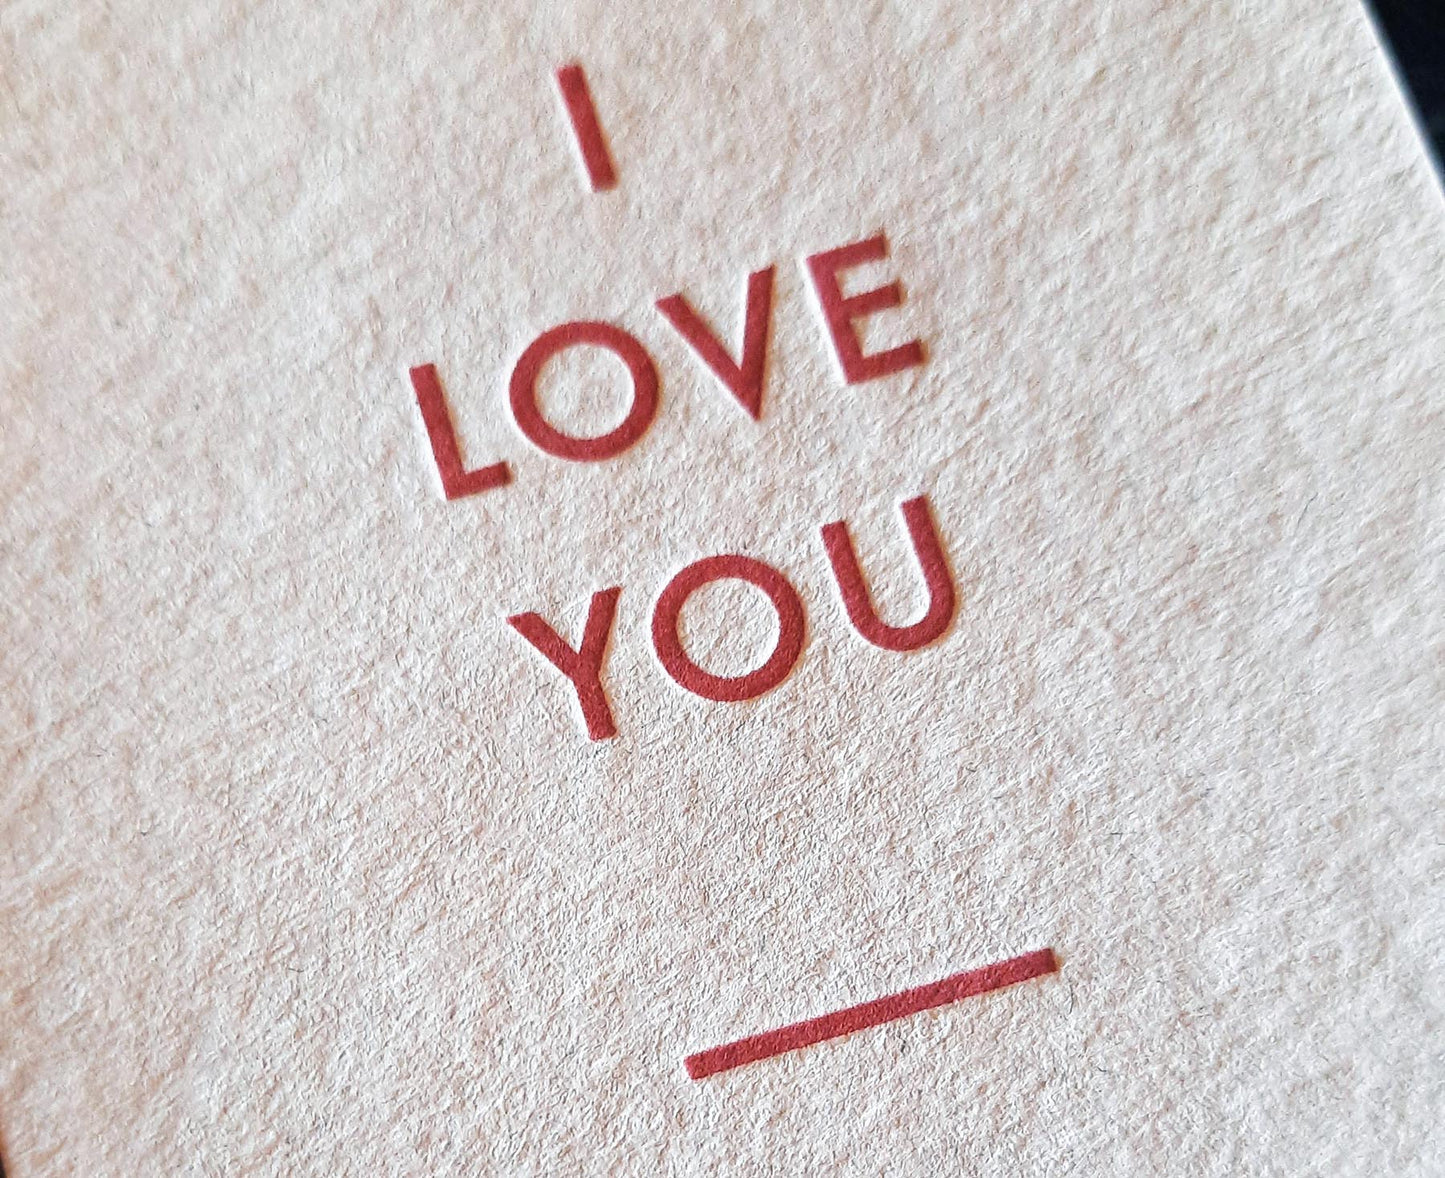 I Love You Letterpress Card